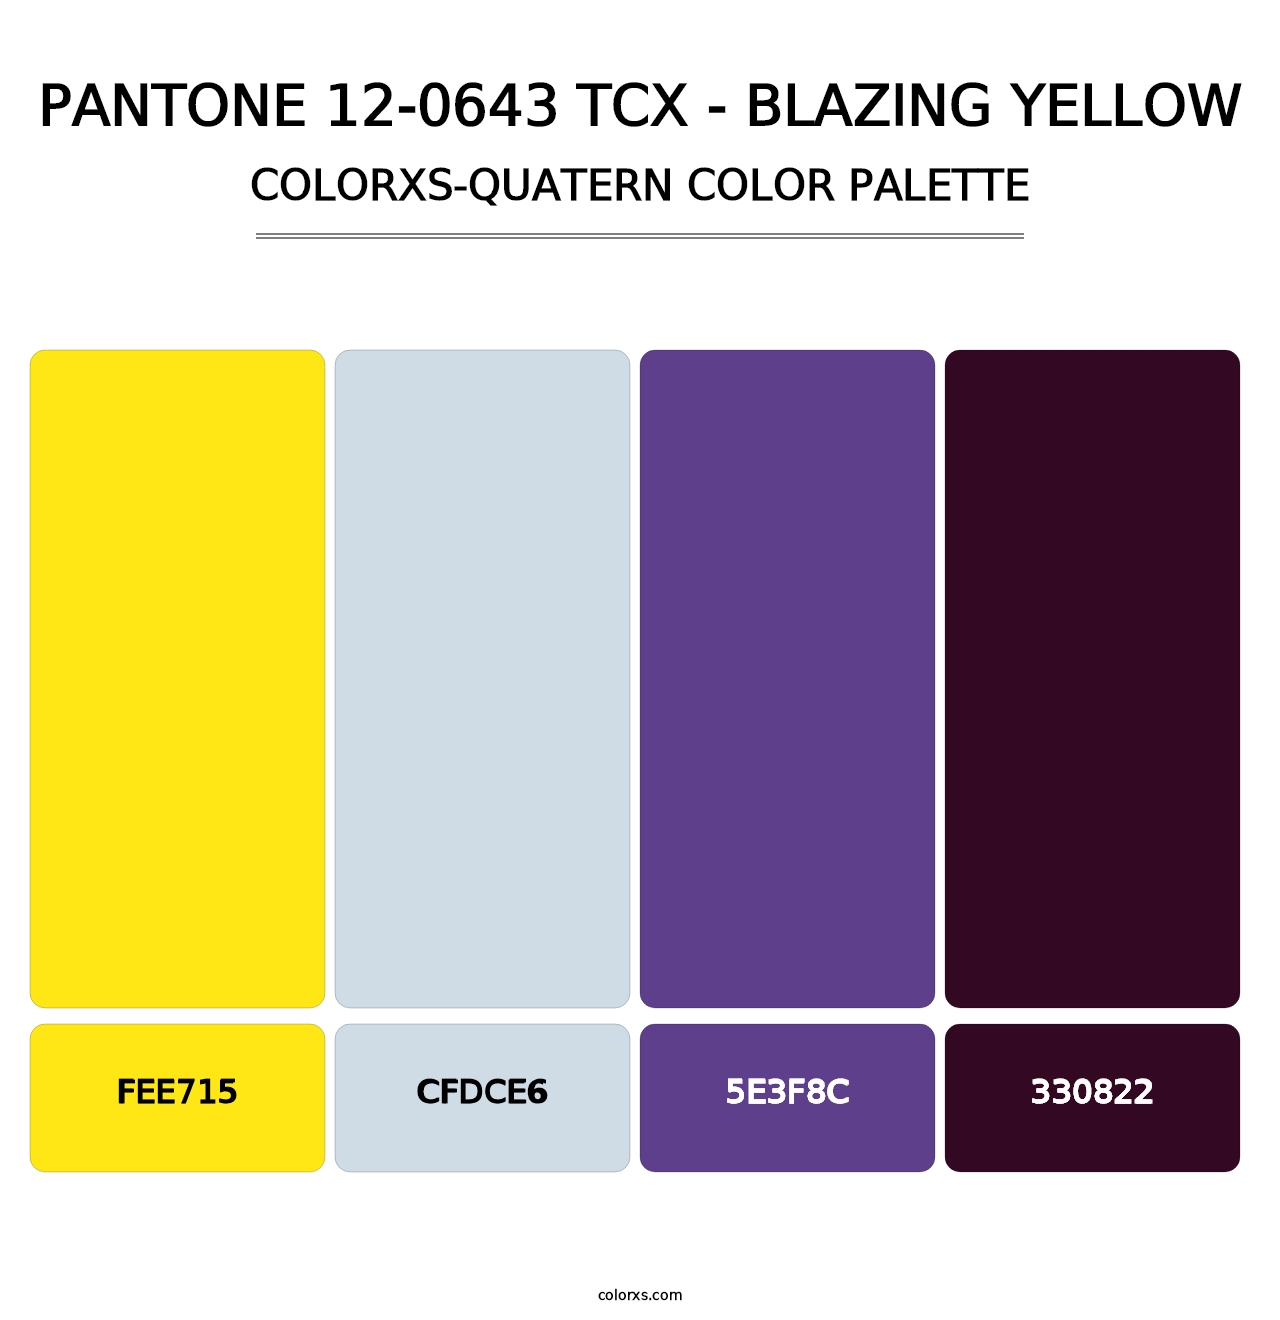 PANTONE 12-0643 TCX - Blazing Yellow - Colorxs Quatern Palette